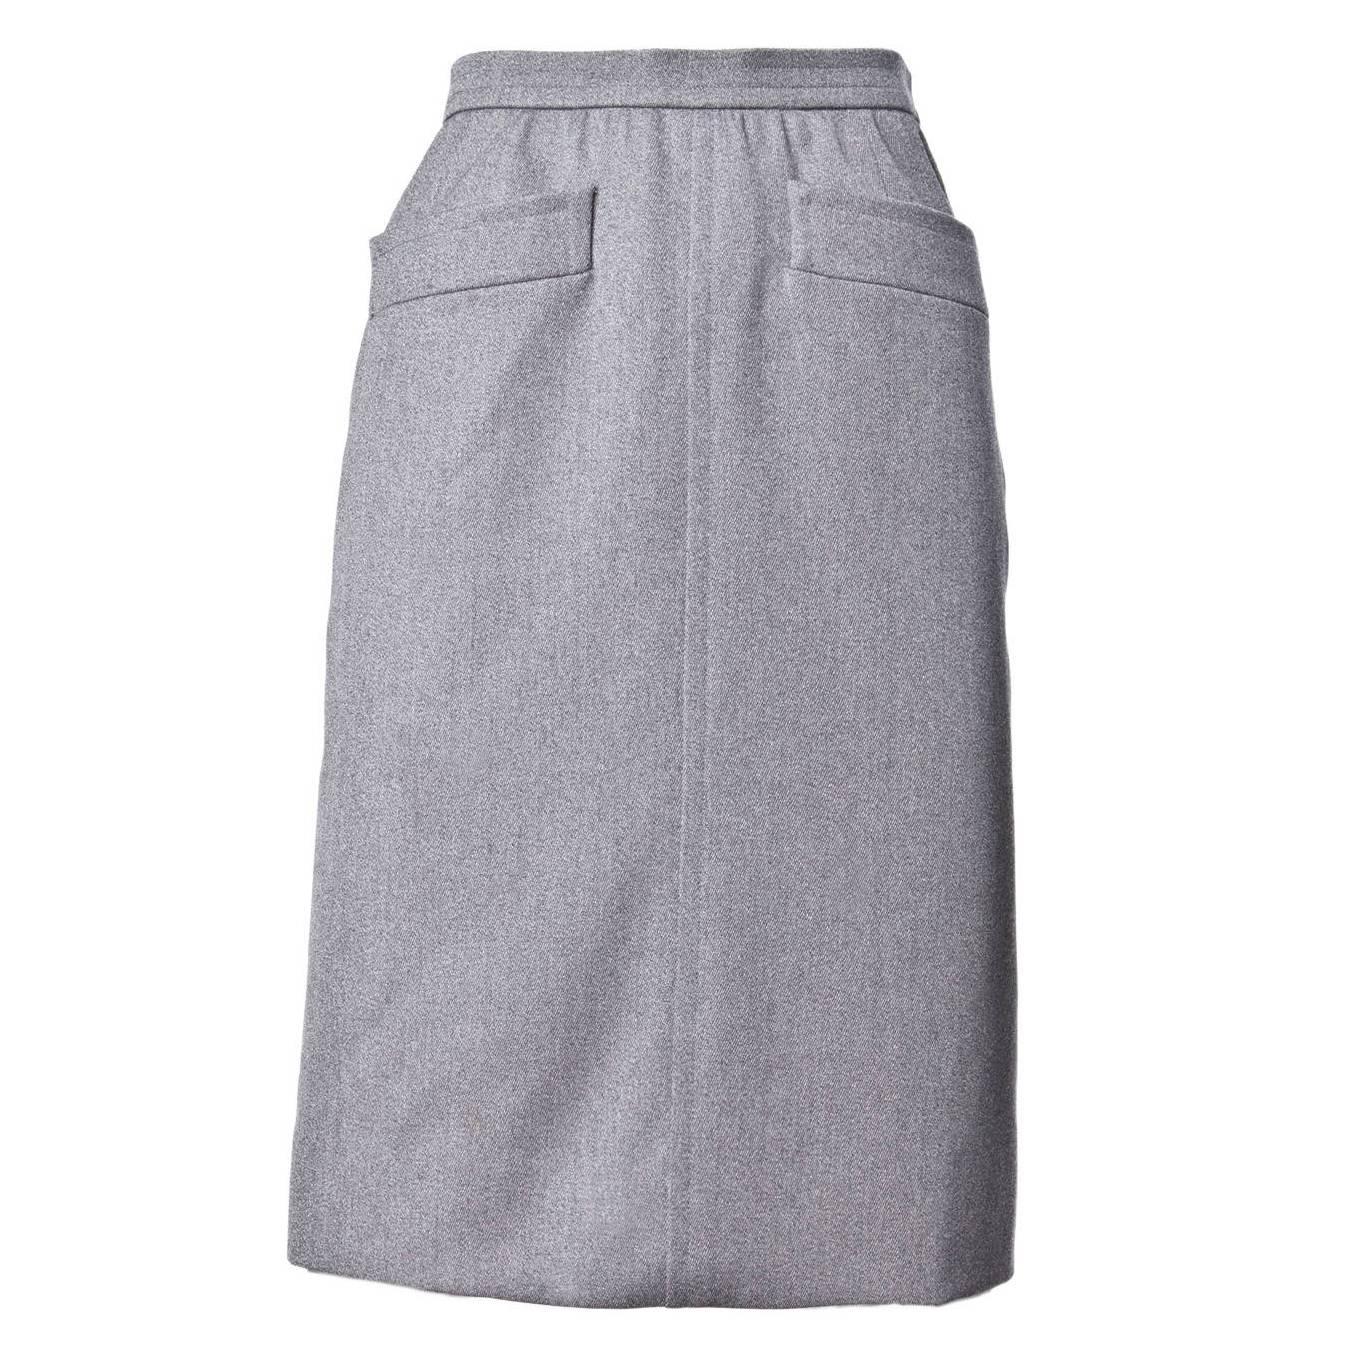 YSL Yves Saint Laurent Vintage 1960s 60s Gray Wool Pencil Skirt For Sale